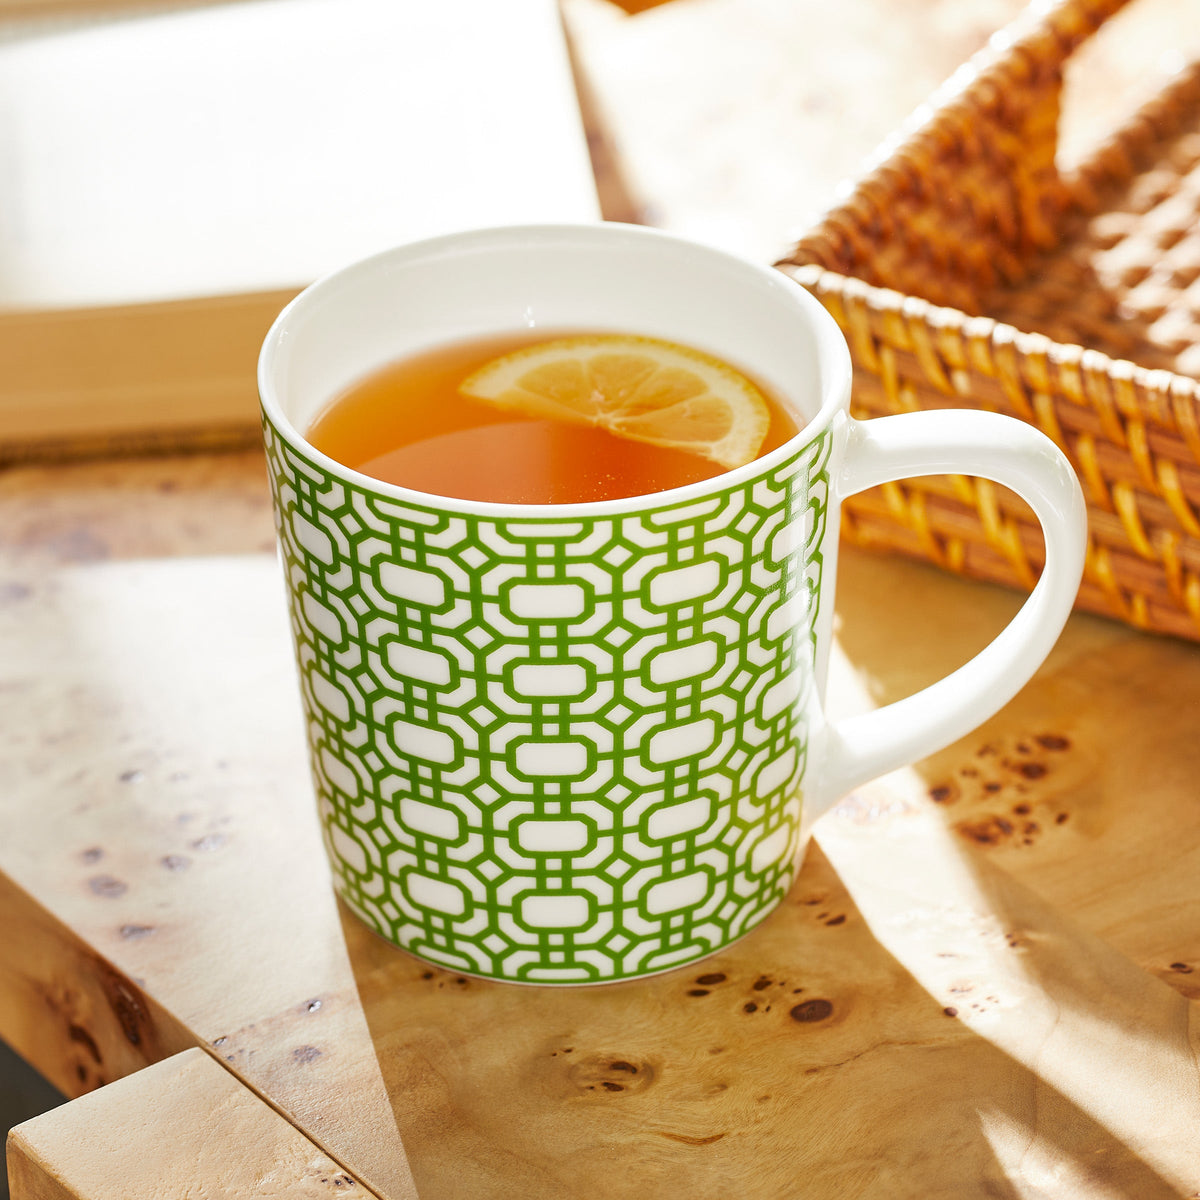 A Newport Garden Gate Verde Mug from Caskata Artisanal Home, filled with light brown tea and a lemon slice, sits on a wooden surface near a wicker basket.